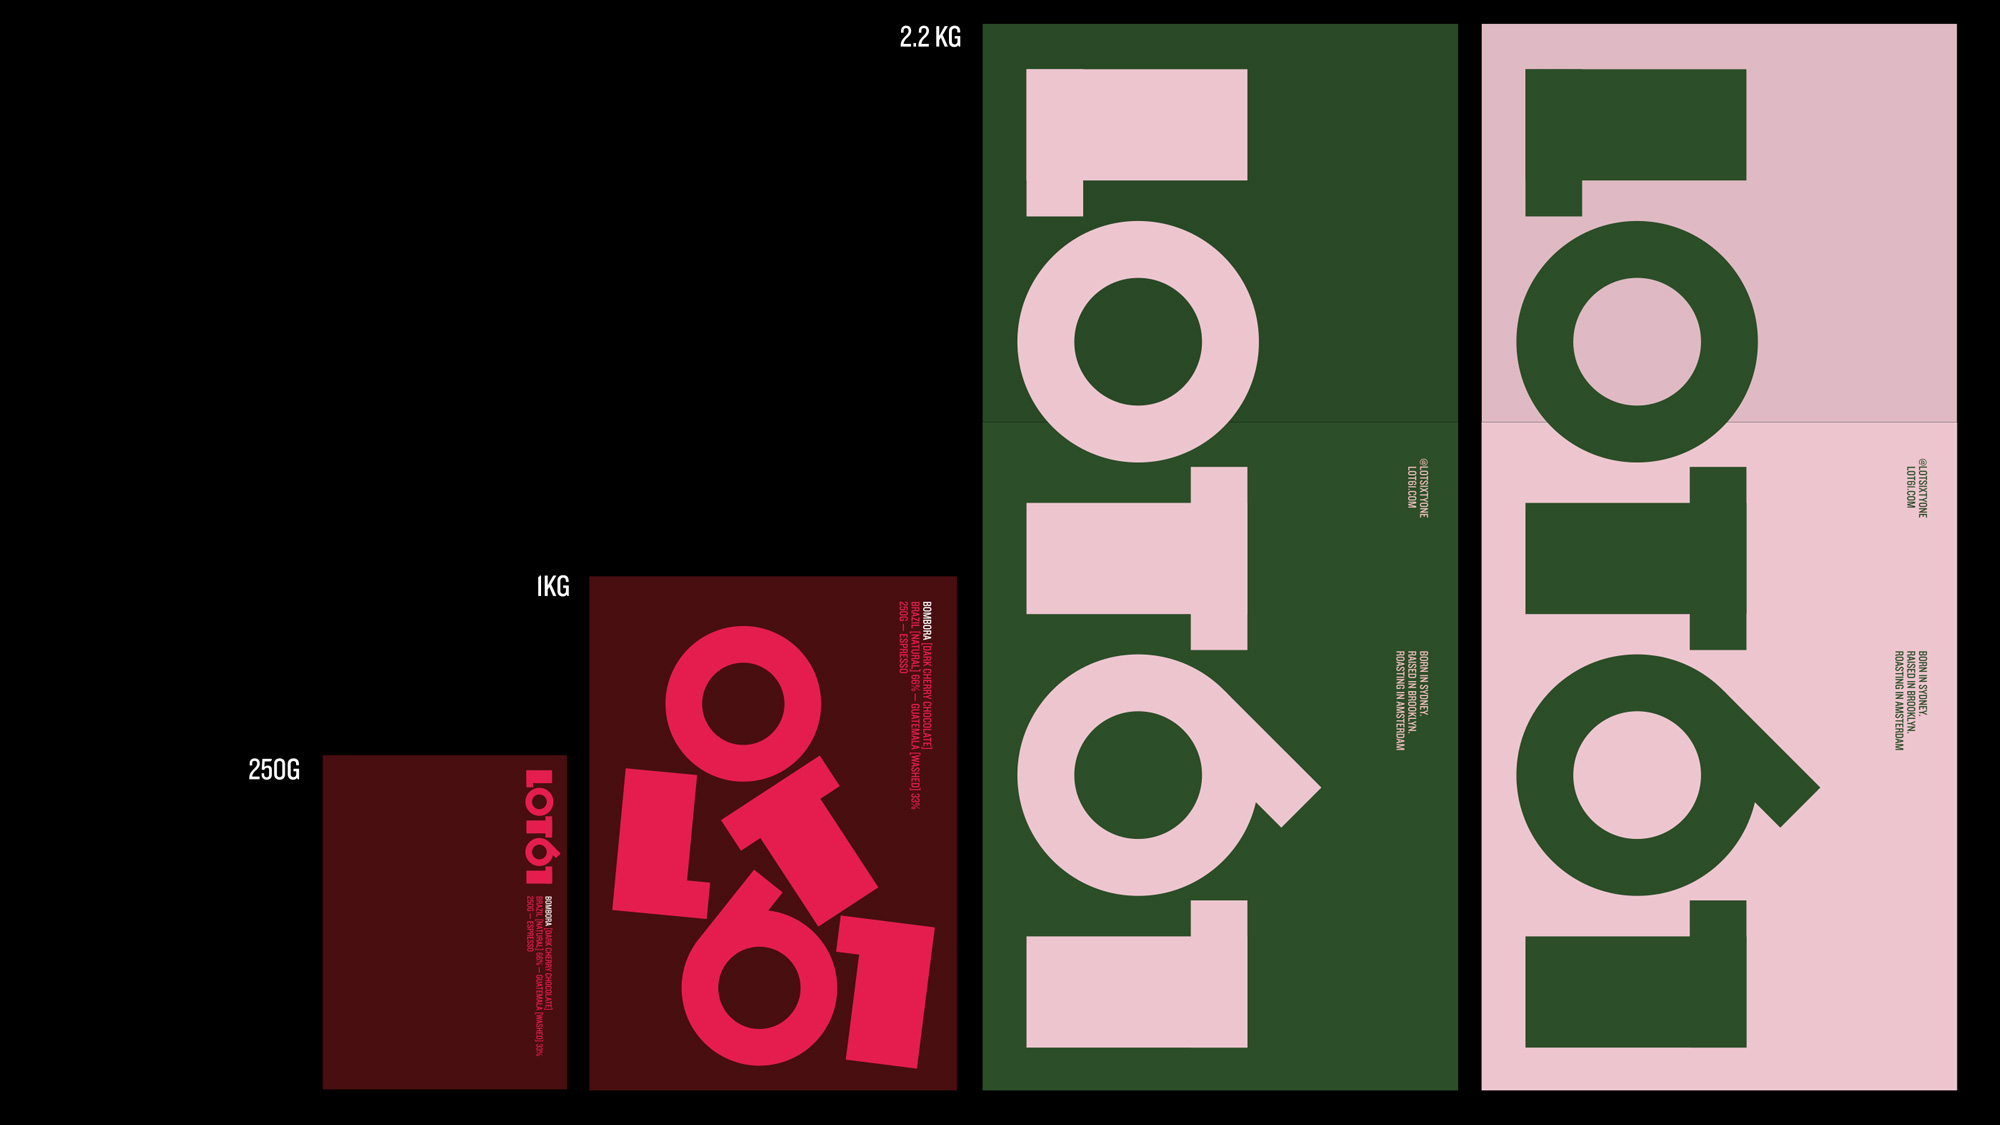 New Logo and Identity for Lot61 by Smörgåsbord